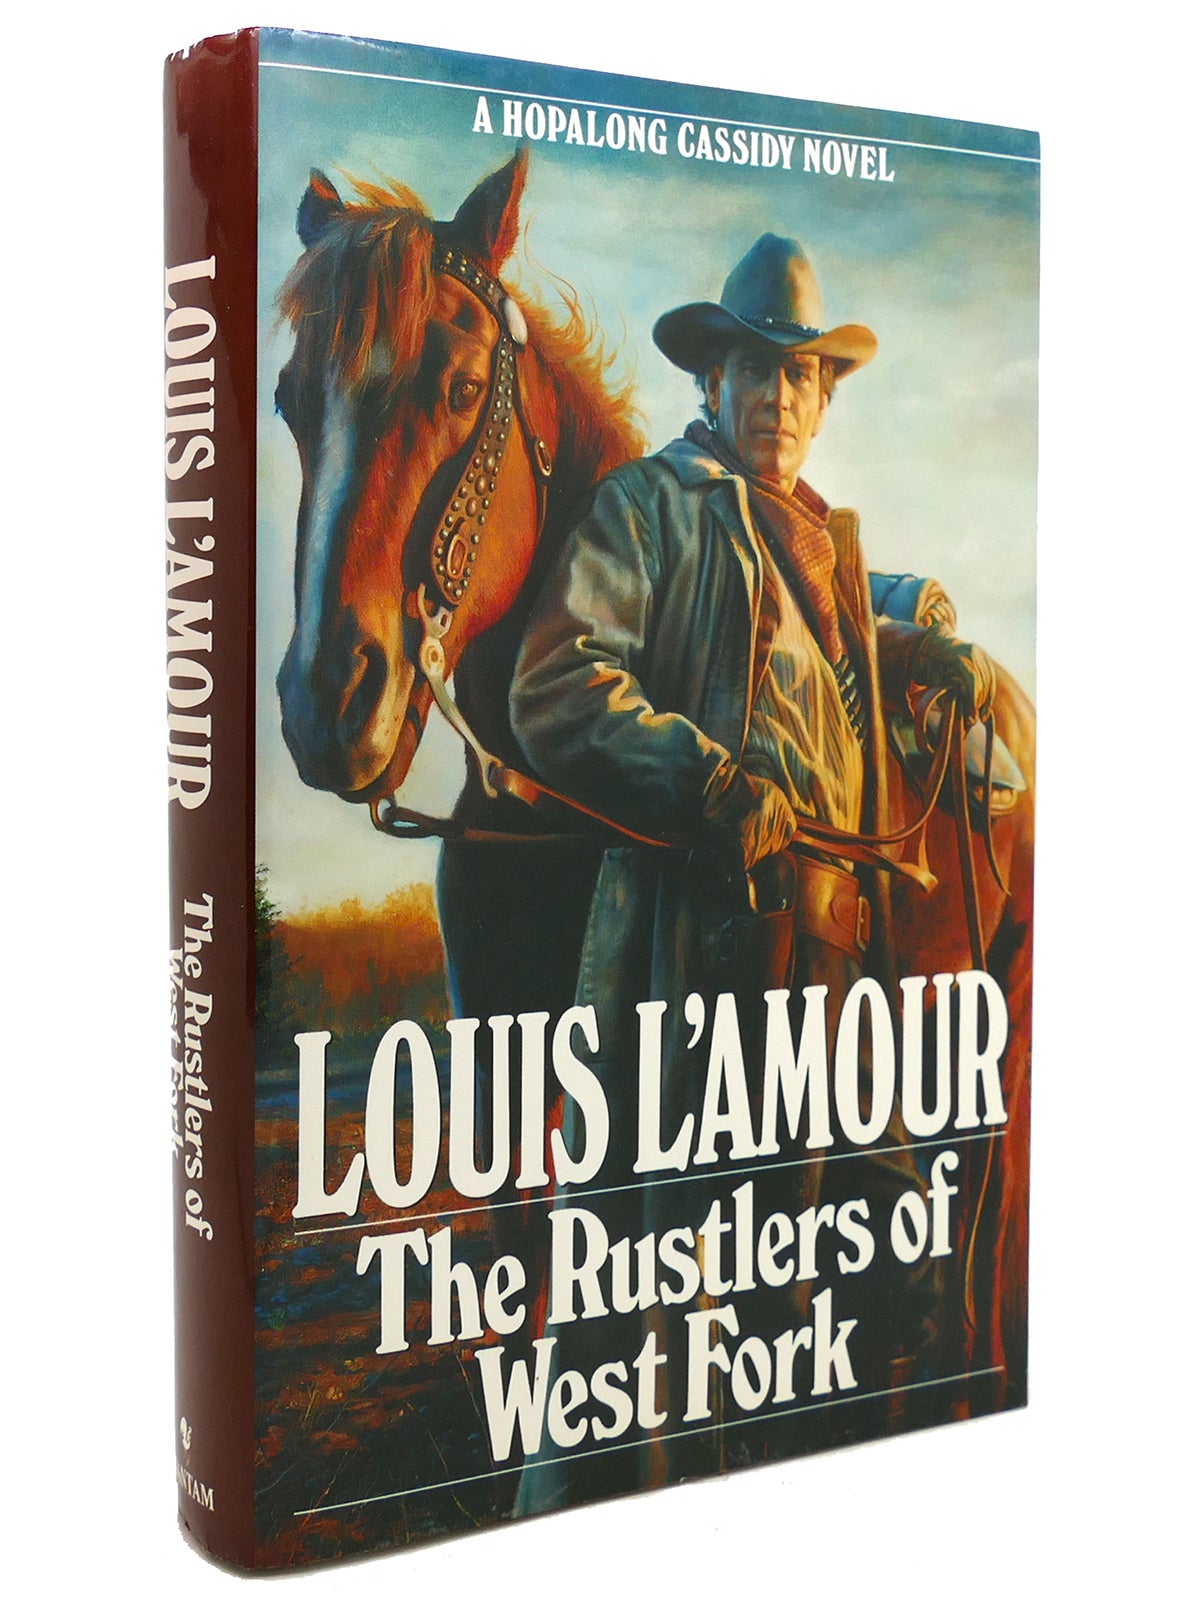 The Rustlers of West Fork: A Hopalong Cassidy Novel [Book]